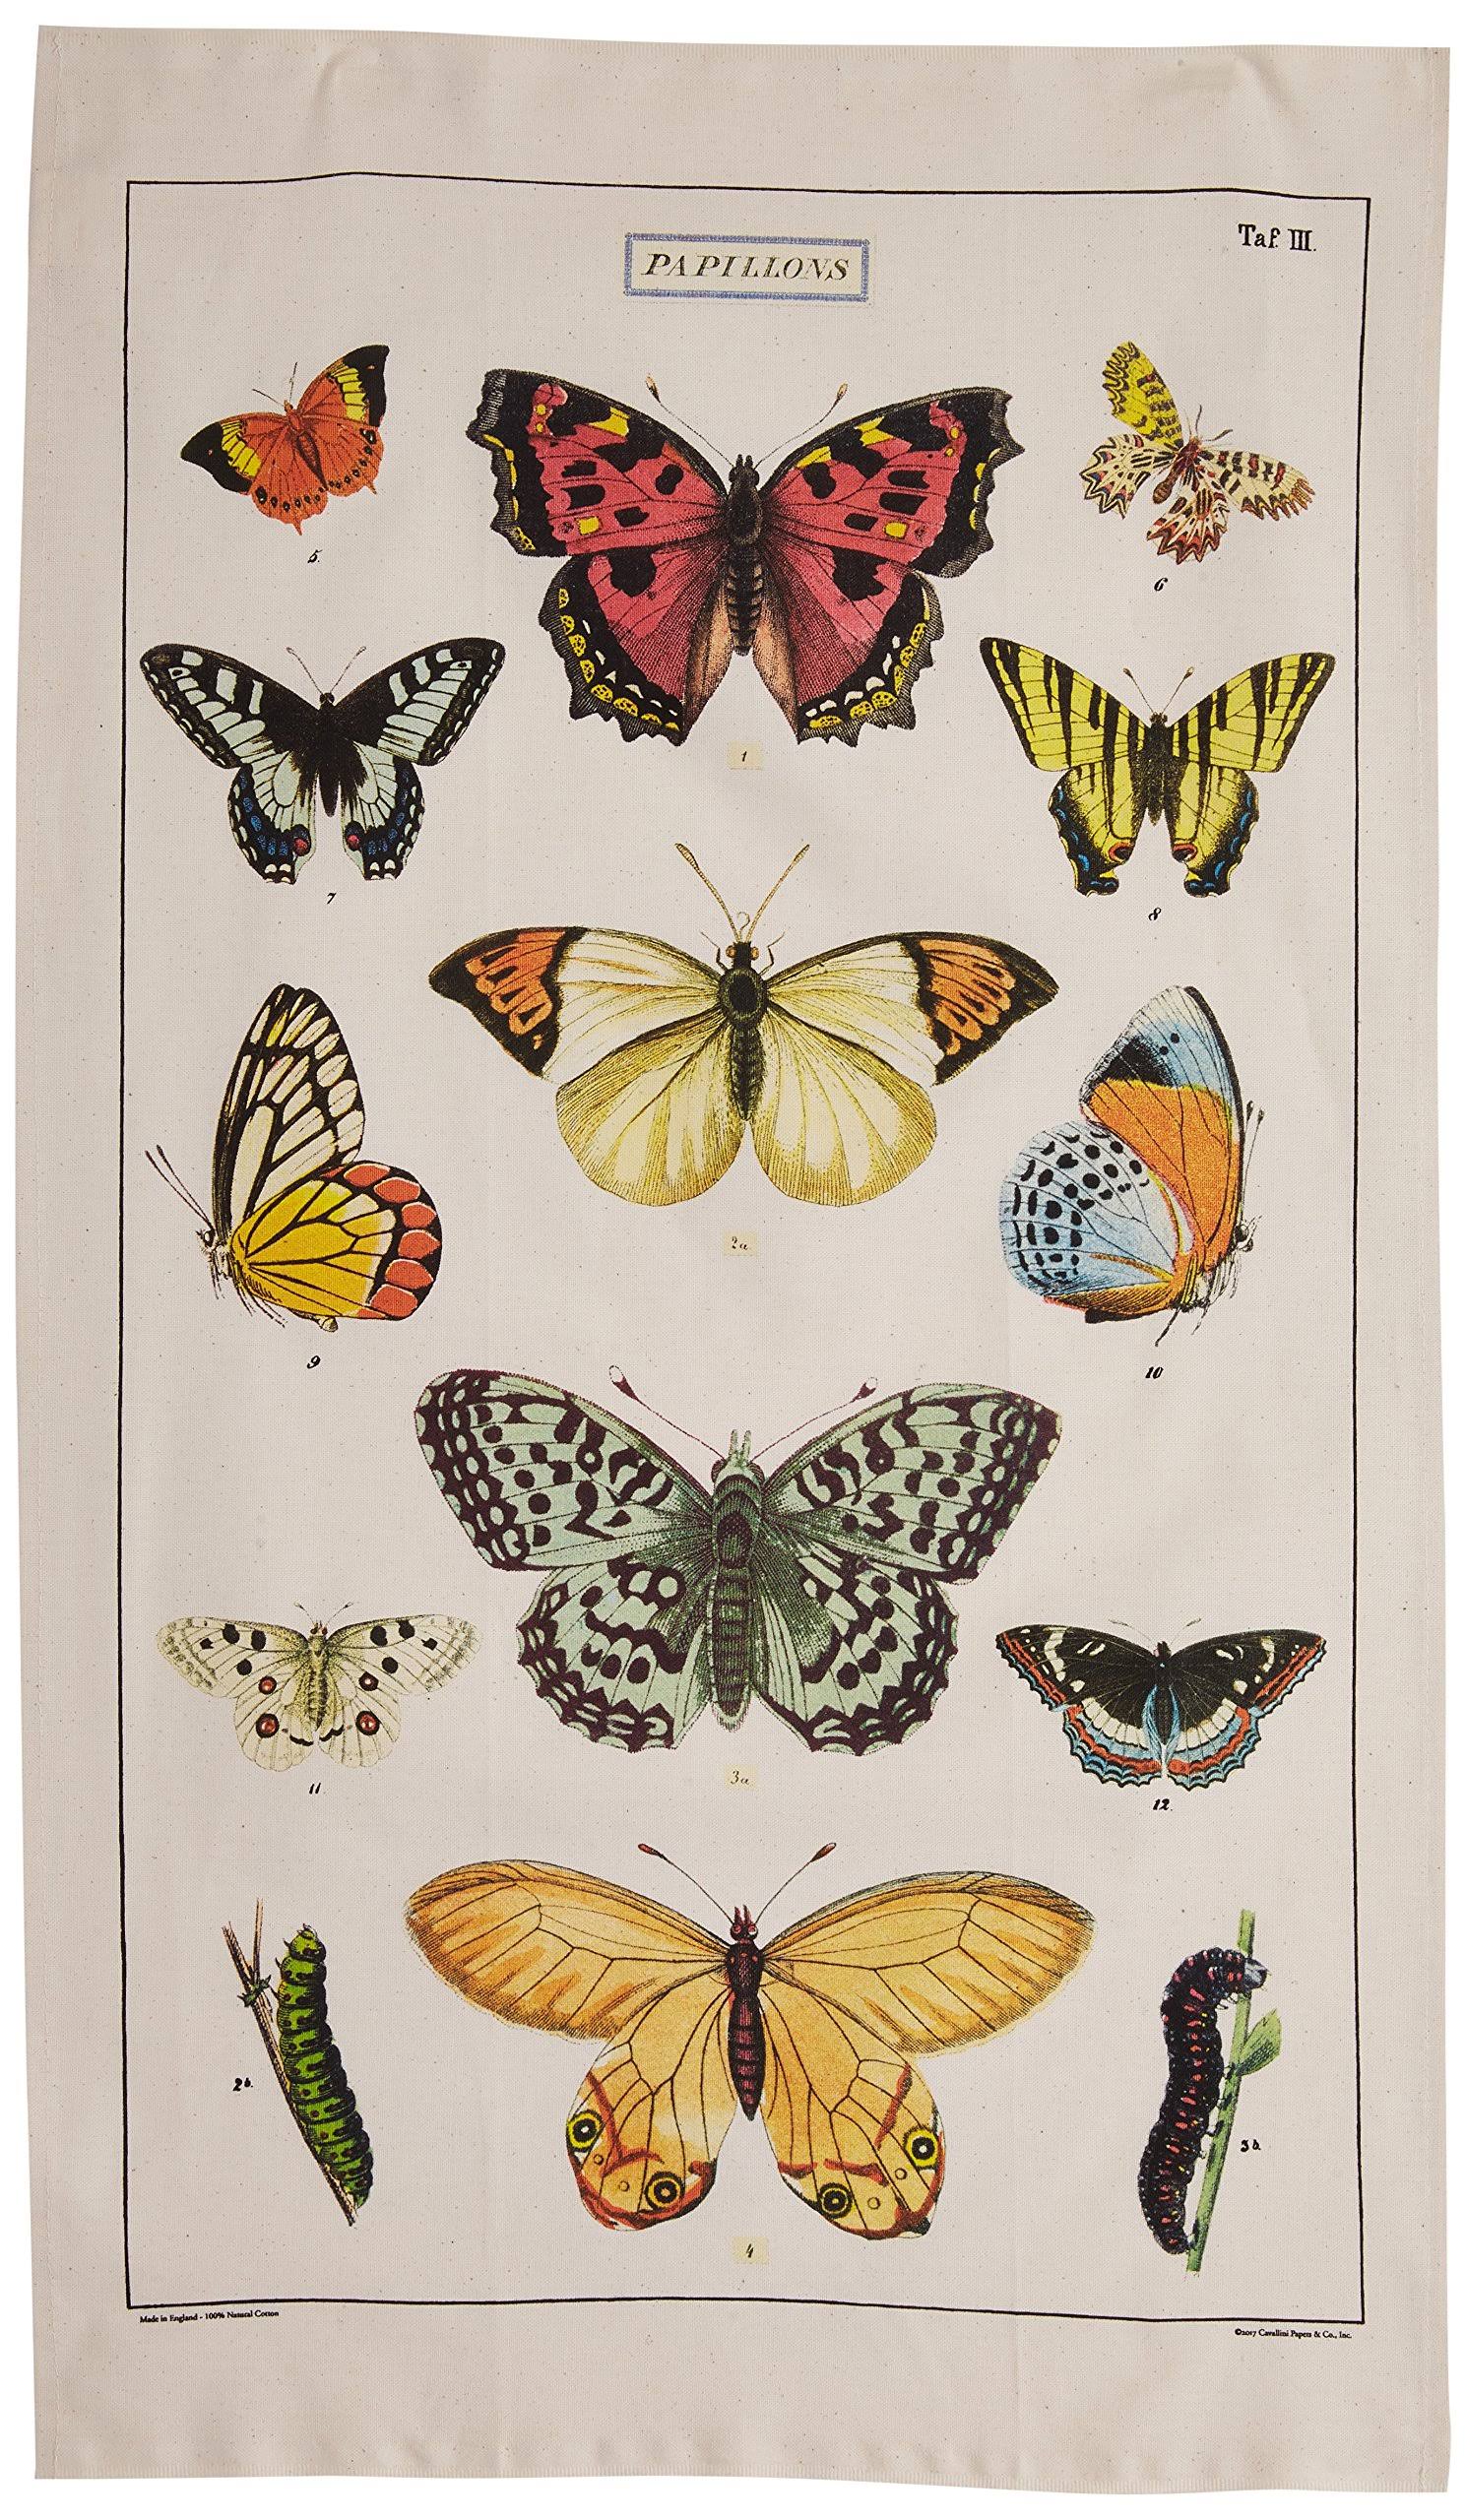 Cavallini Papers & Co. Vintage Tea Towel, Butterflies